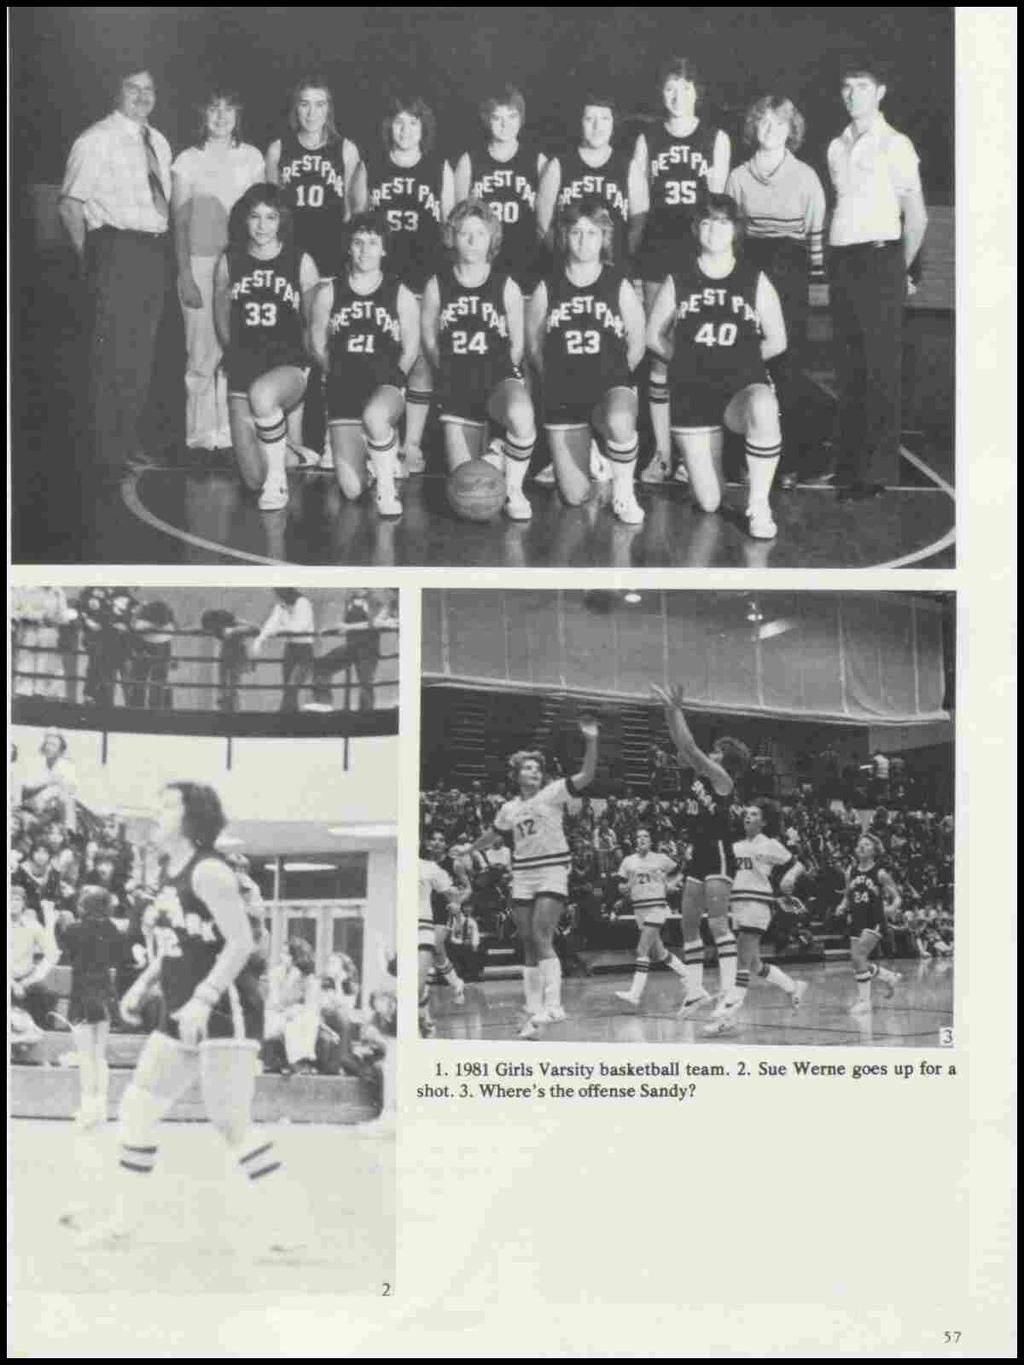 1. 1981 Girls Varsity basketball team. 2.